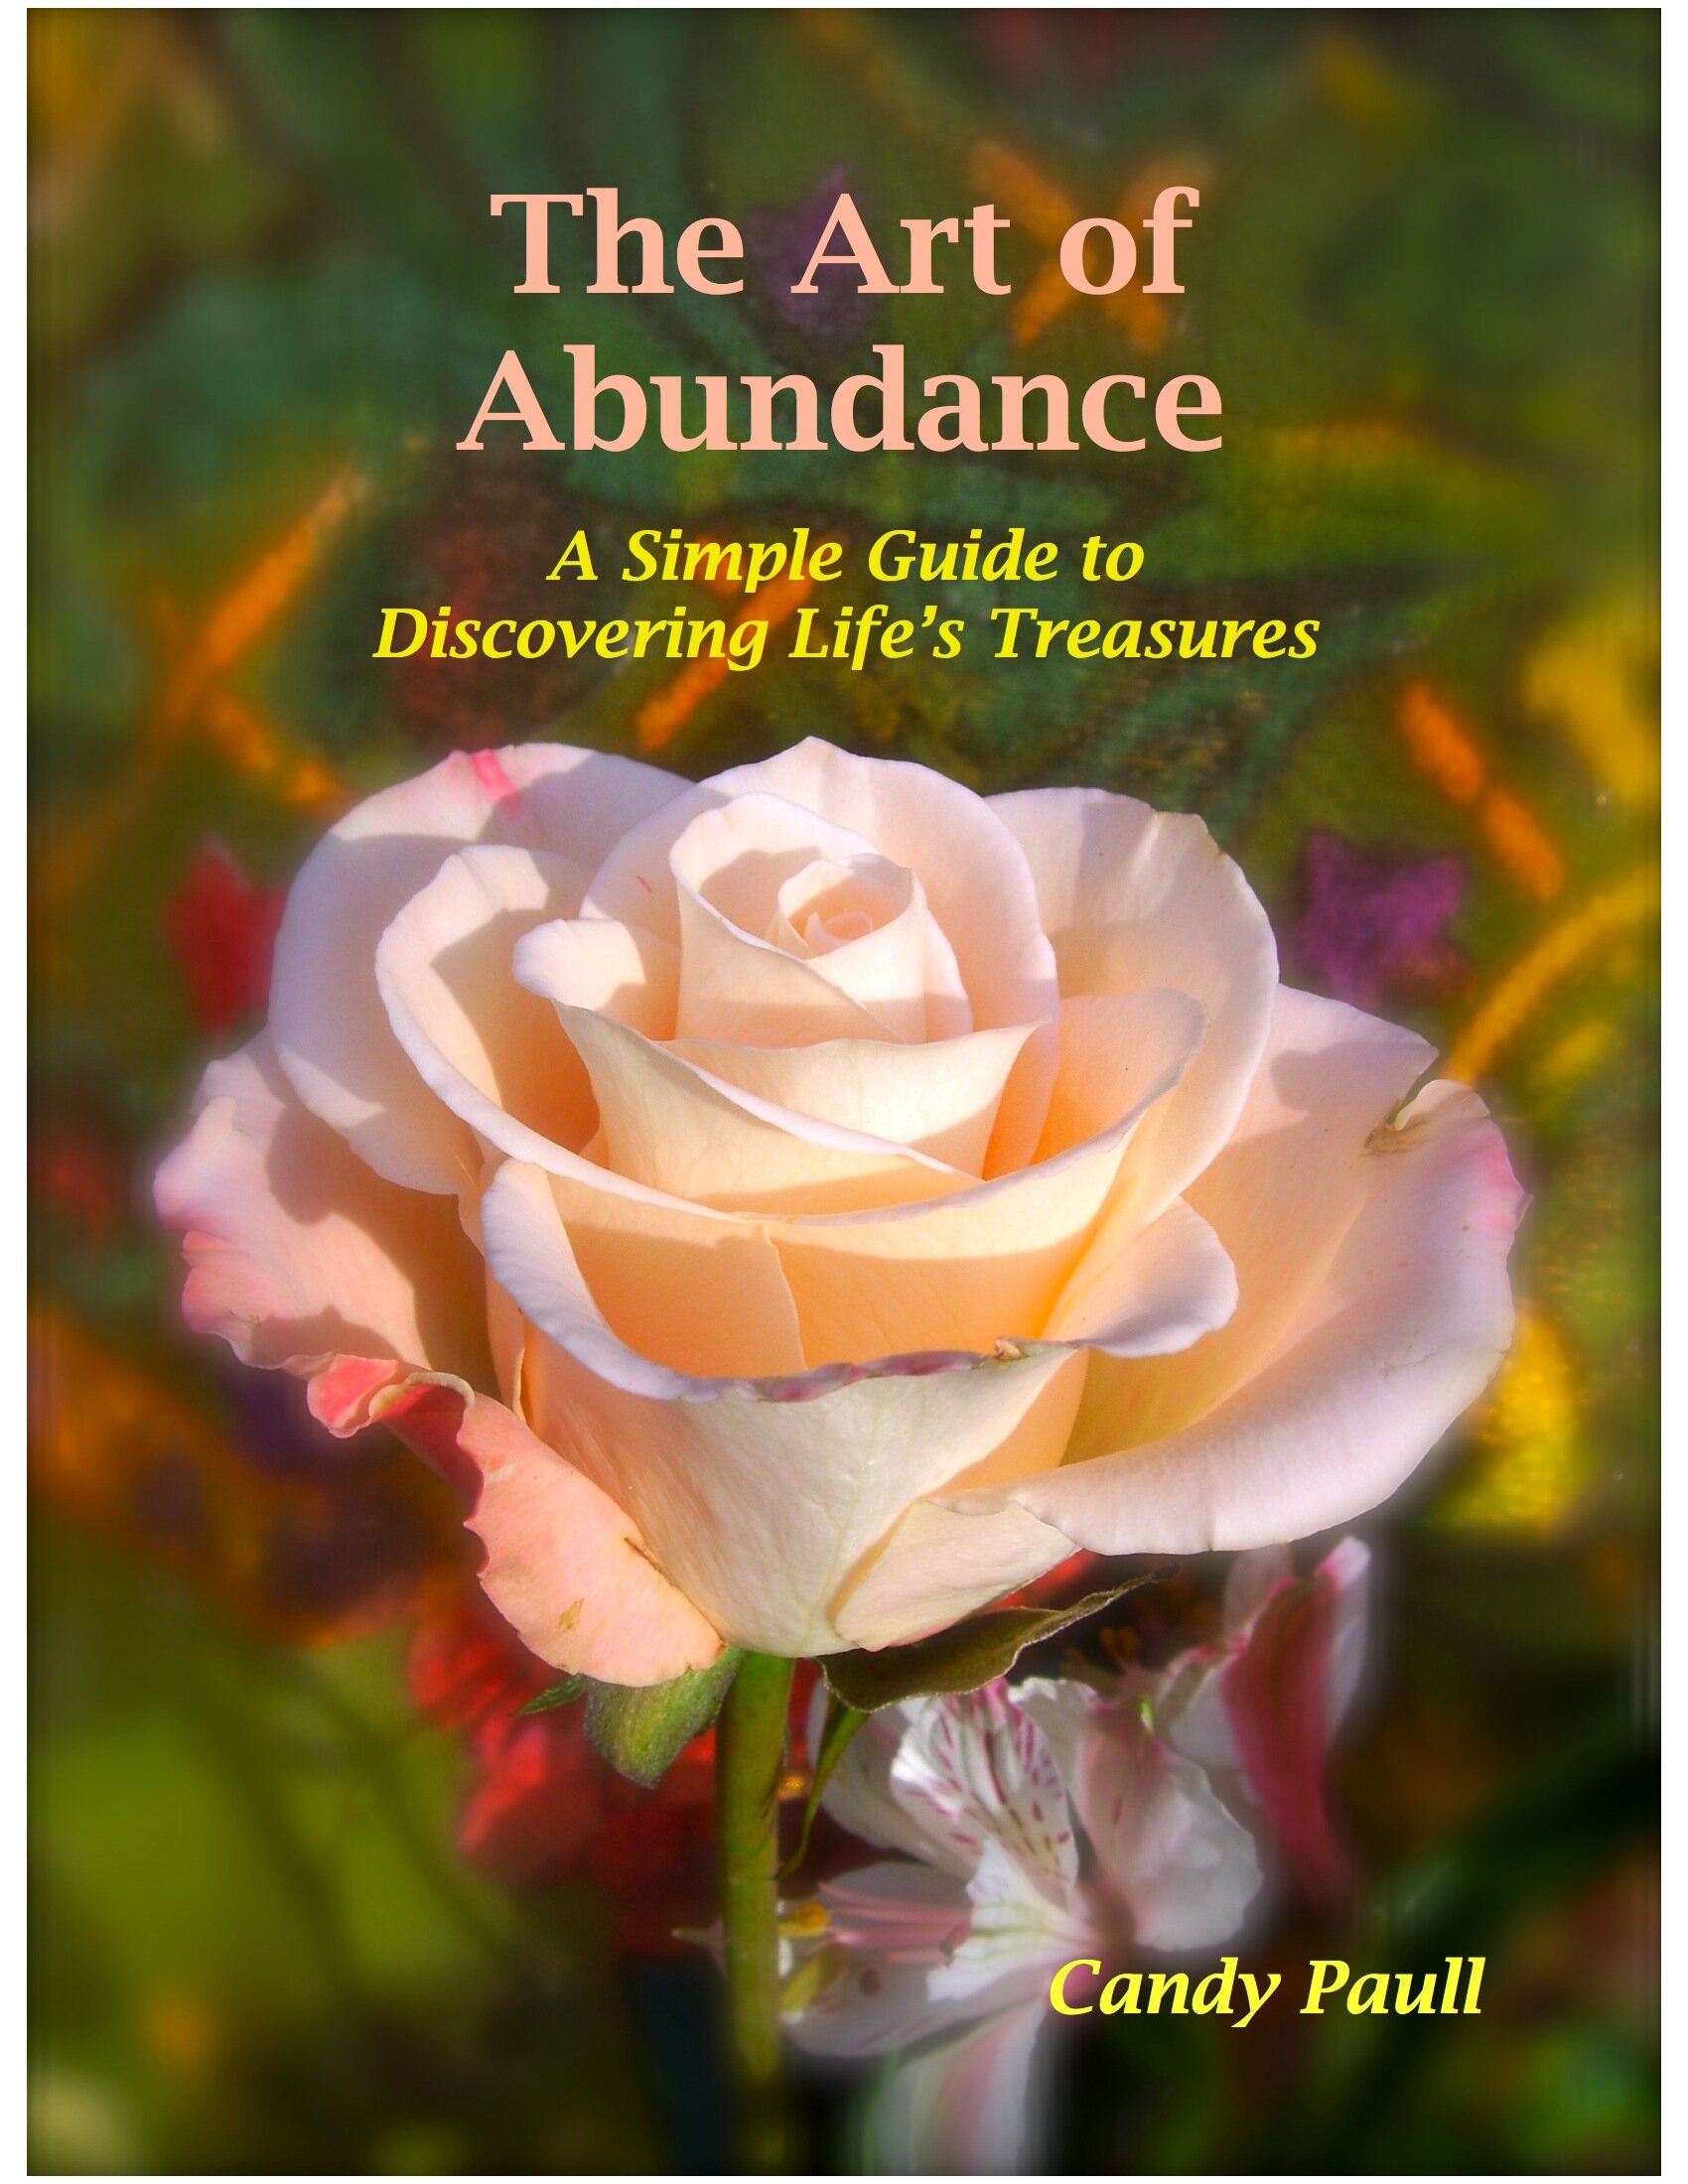 Art of Abundance cover.jpeg